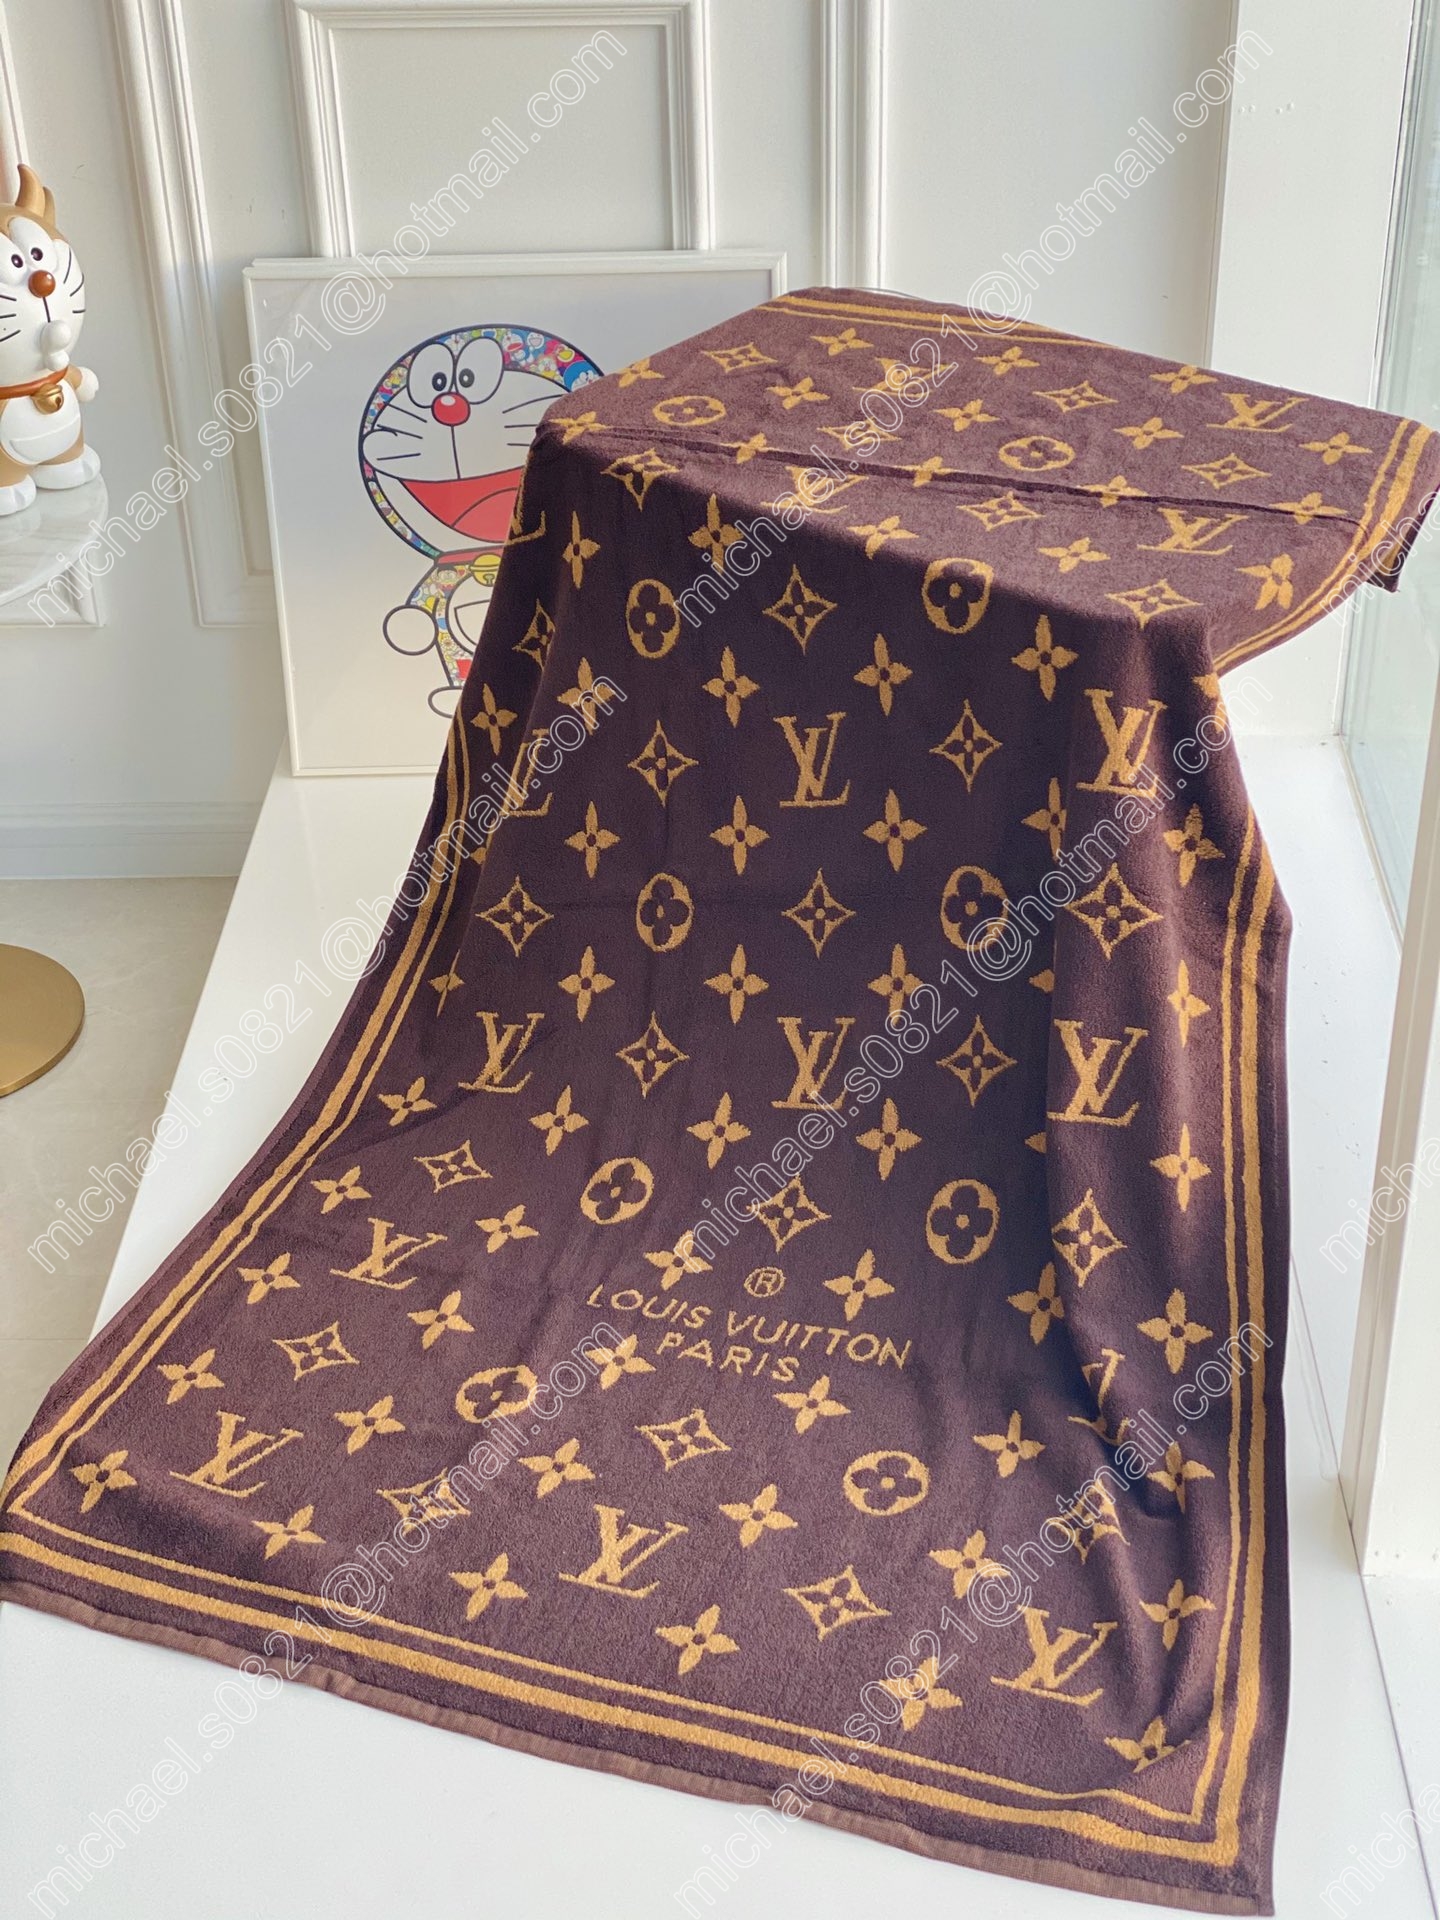 Louis Vuitton Monogram classic beach towel (M72364, M72364)